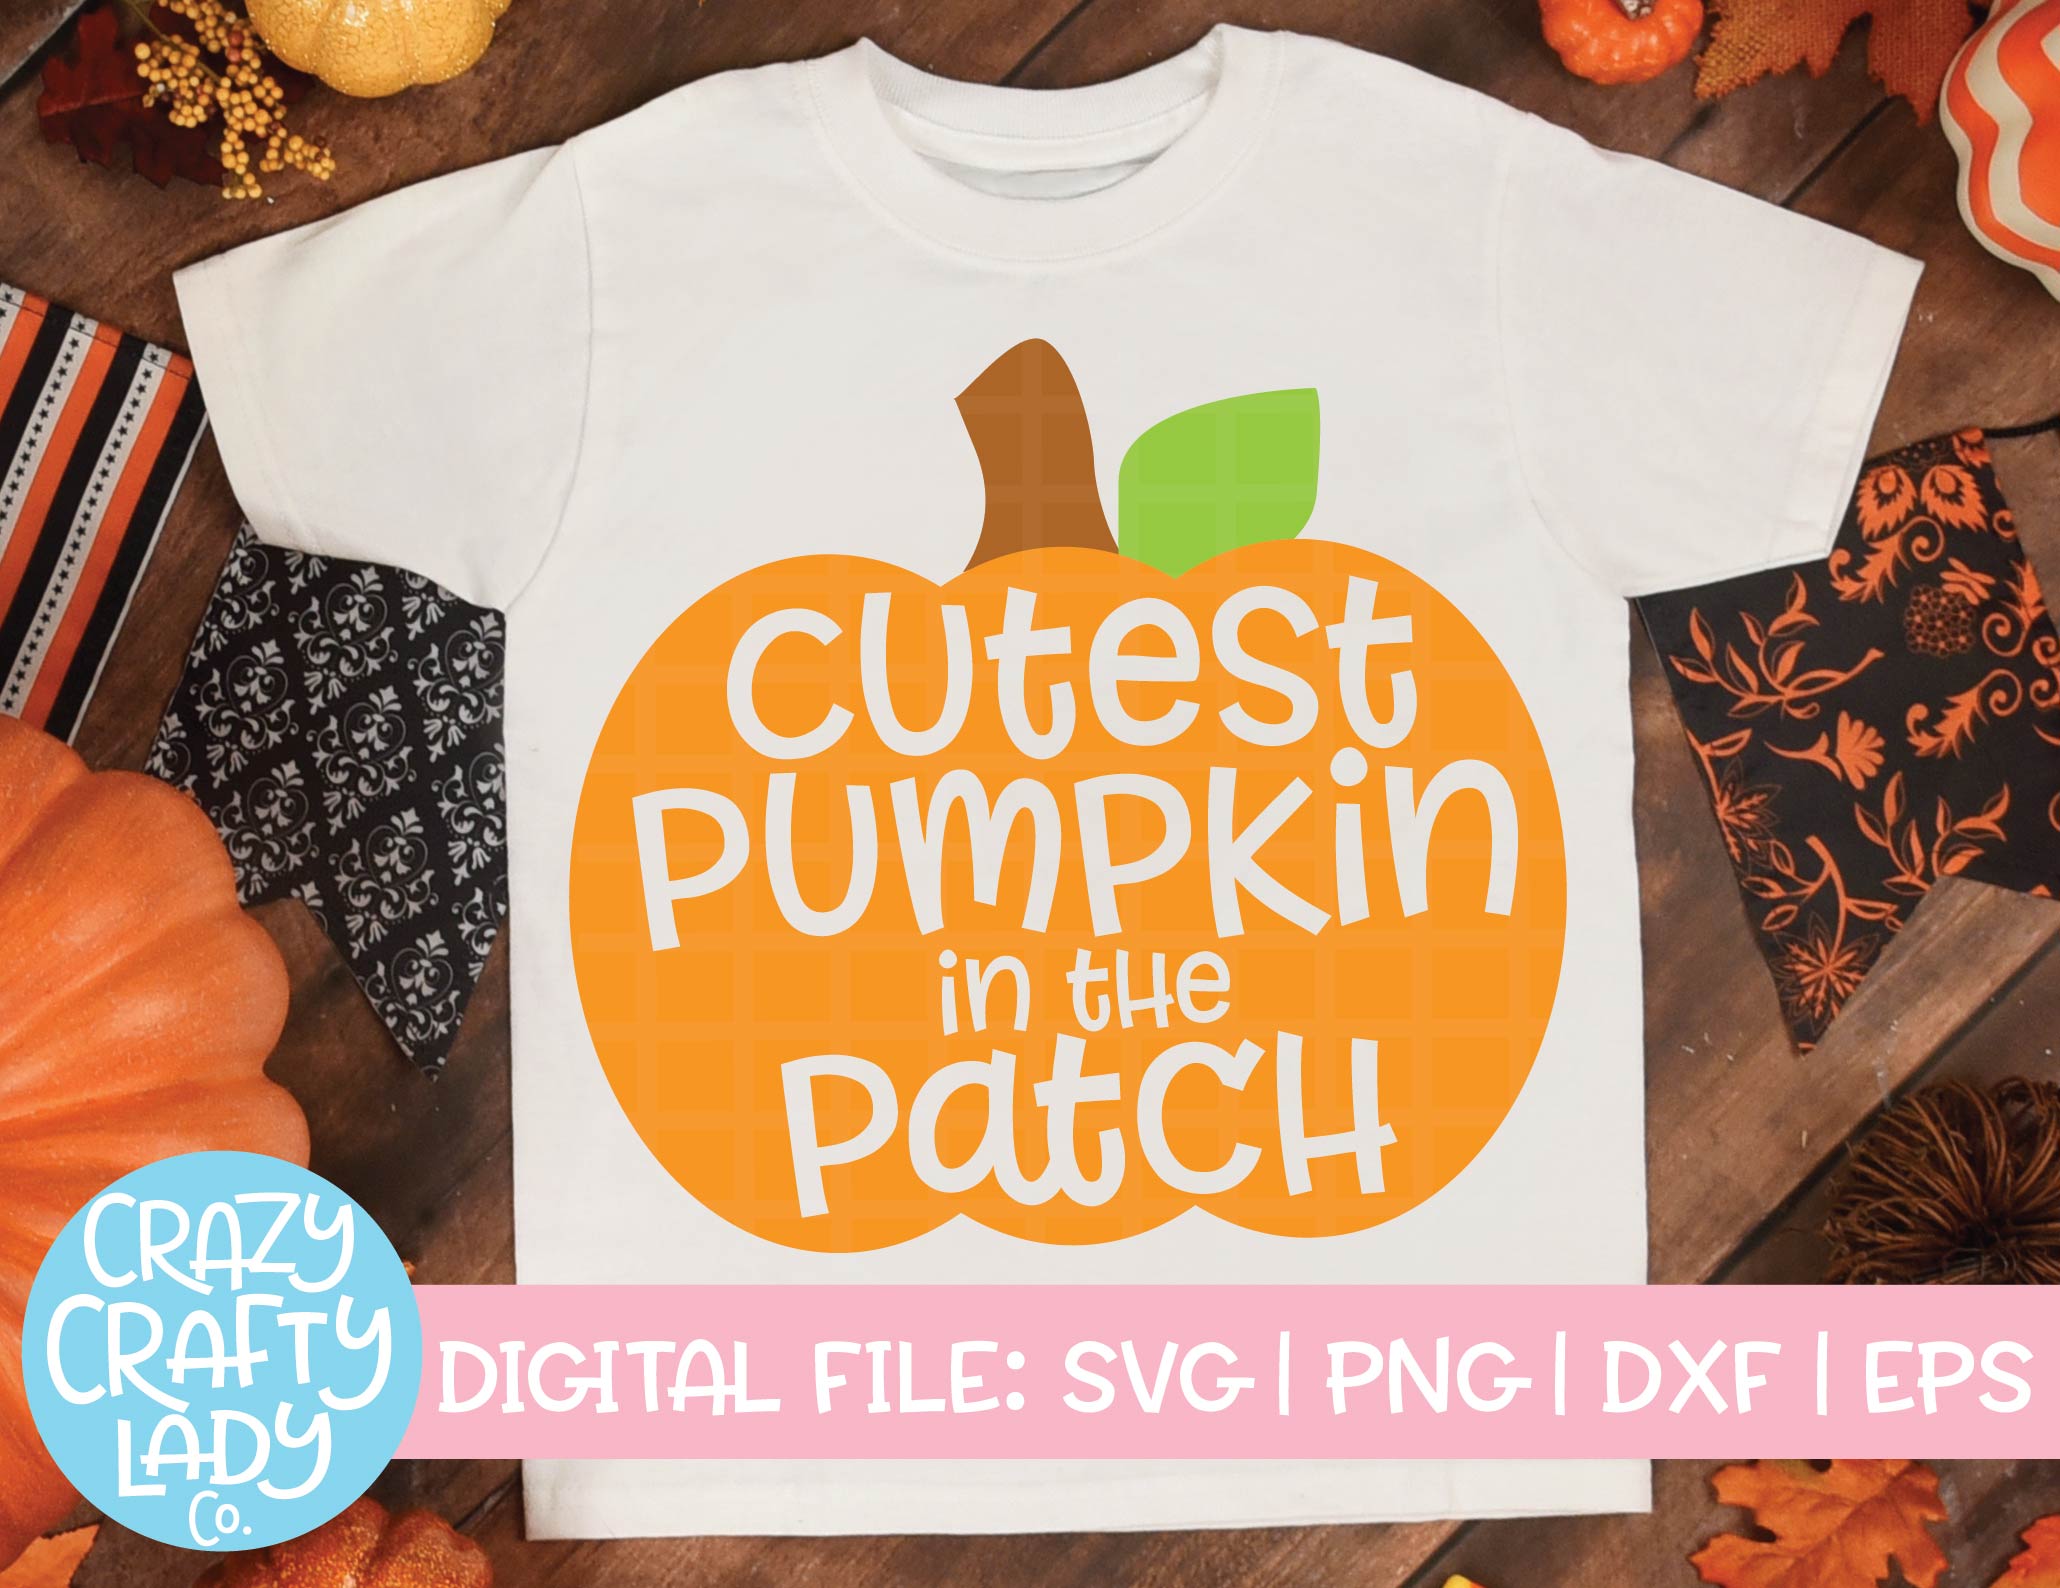 Cutest Pumpkin In The Patch Svg Cut File Crazy Crafty Lady Co